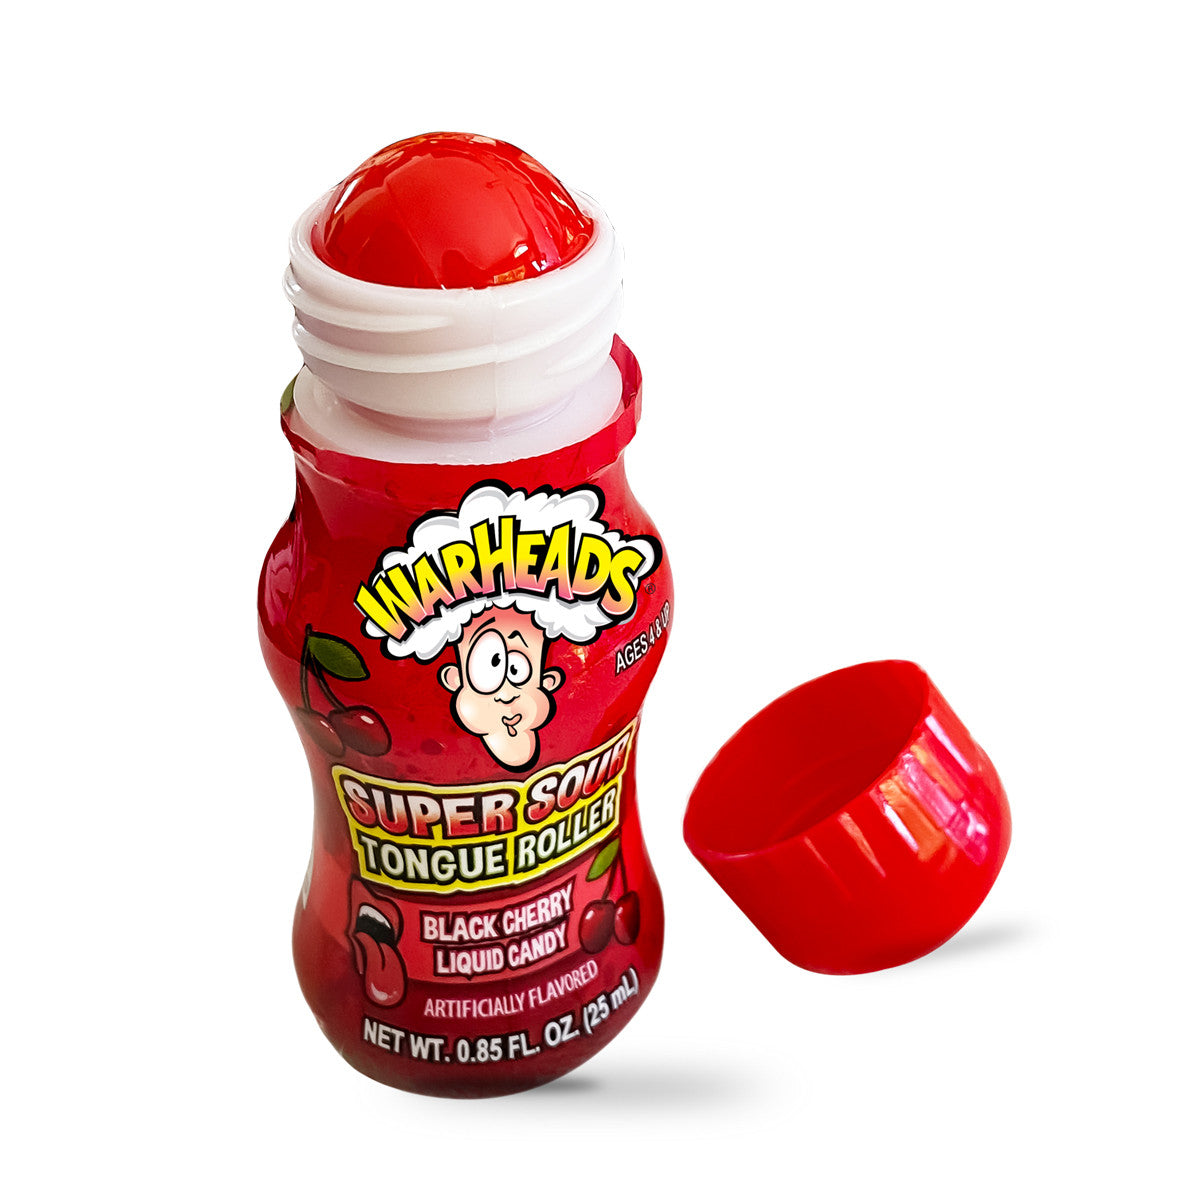 WarHeads Super Sour Tongue Roller Liquid Candy 0.85oz - 12ct